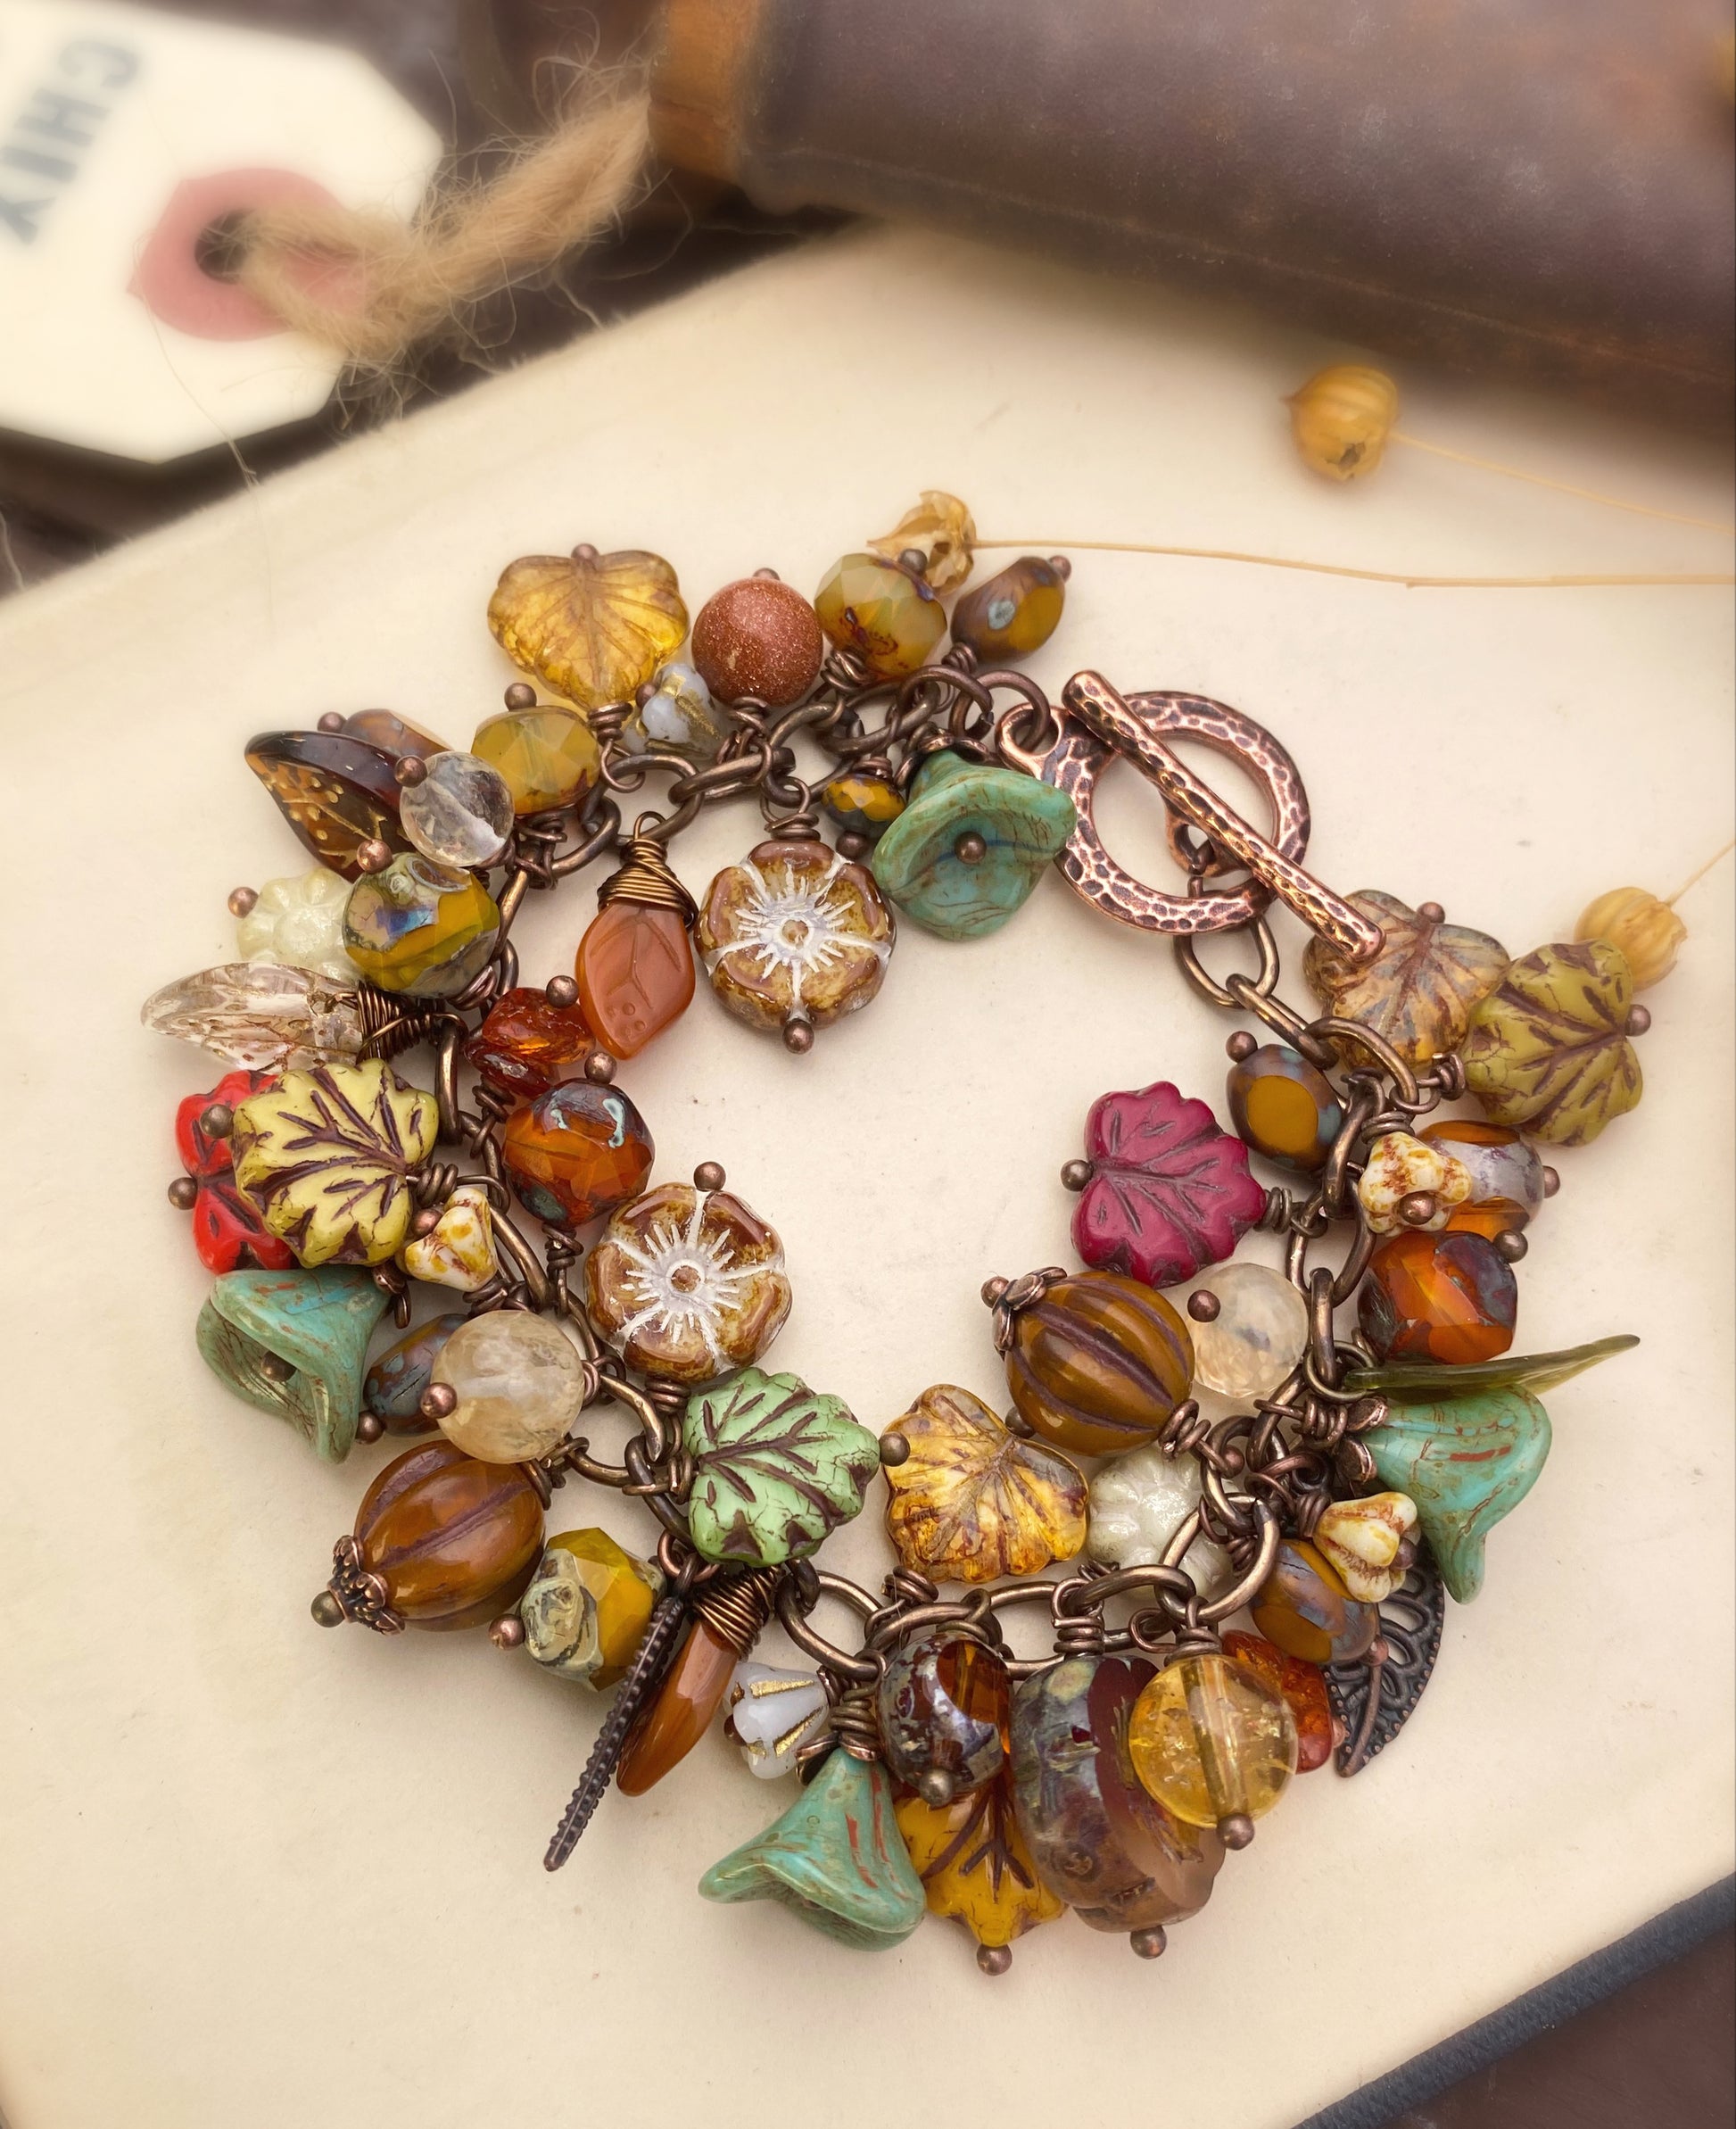 Leaf Beads Jewelry Making, Glass Jewelry Making